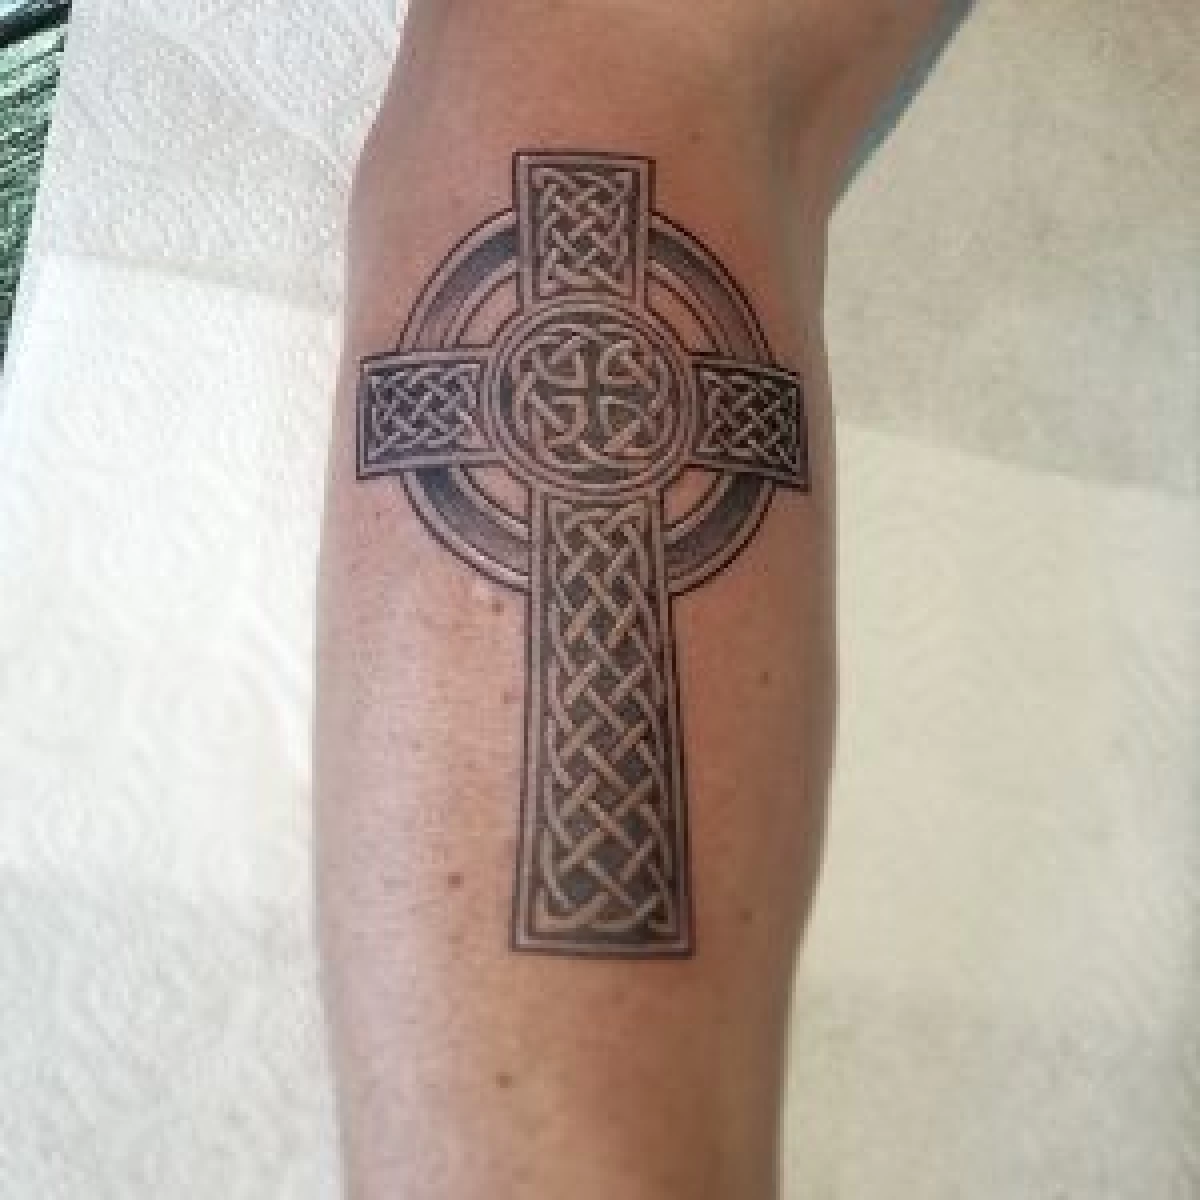 Inked Up Irish Tattoos - #inkedupirish #inkedup #inked #inkedgirls  #inkedgirl #tattooed #tattoo #tattooedgirls #lion #liontattoo  #blackandgreytattoo #kylemckee #sussexnb #monctonnb #saintjohnnb  #fredericton | Facebook